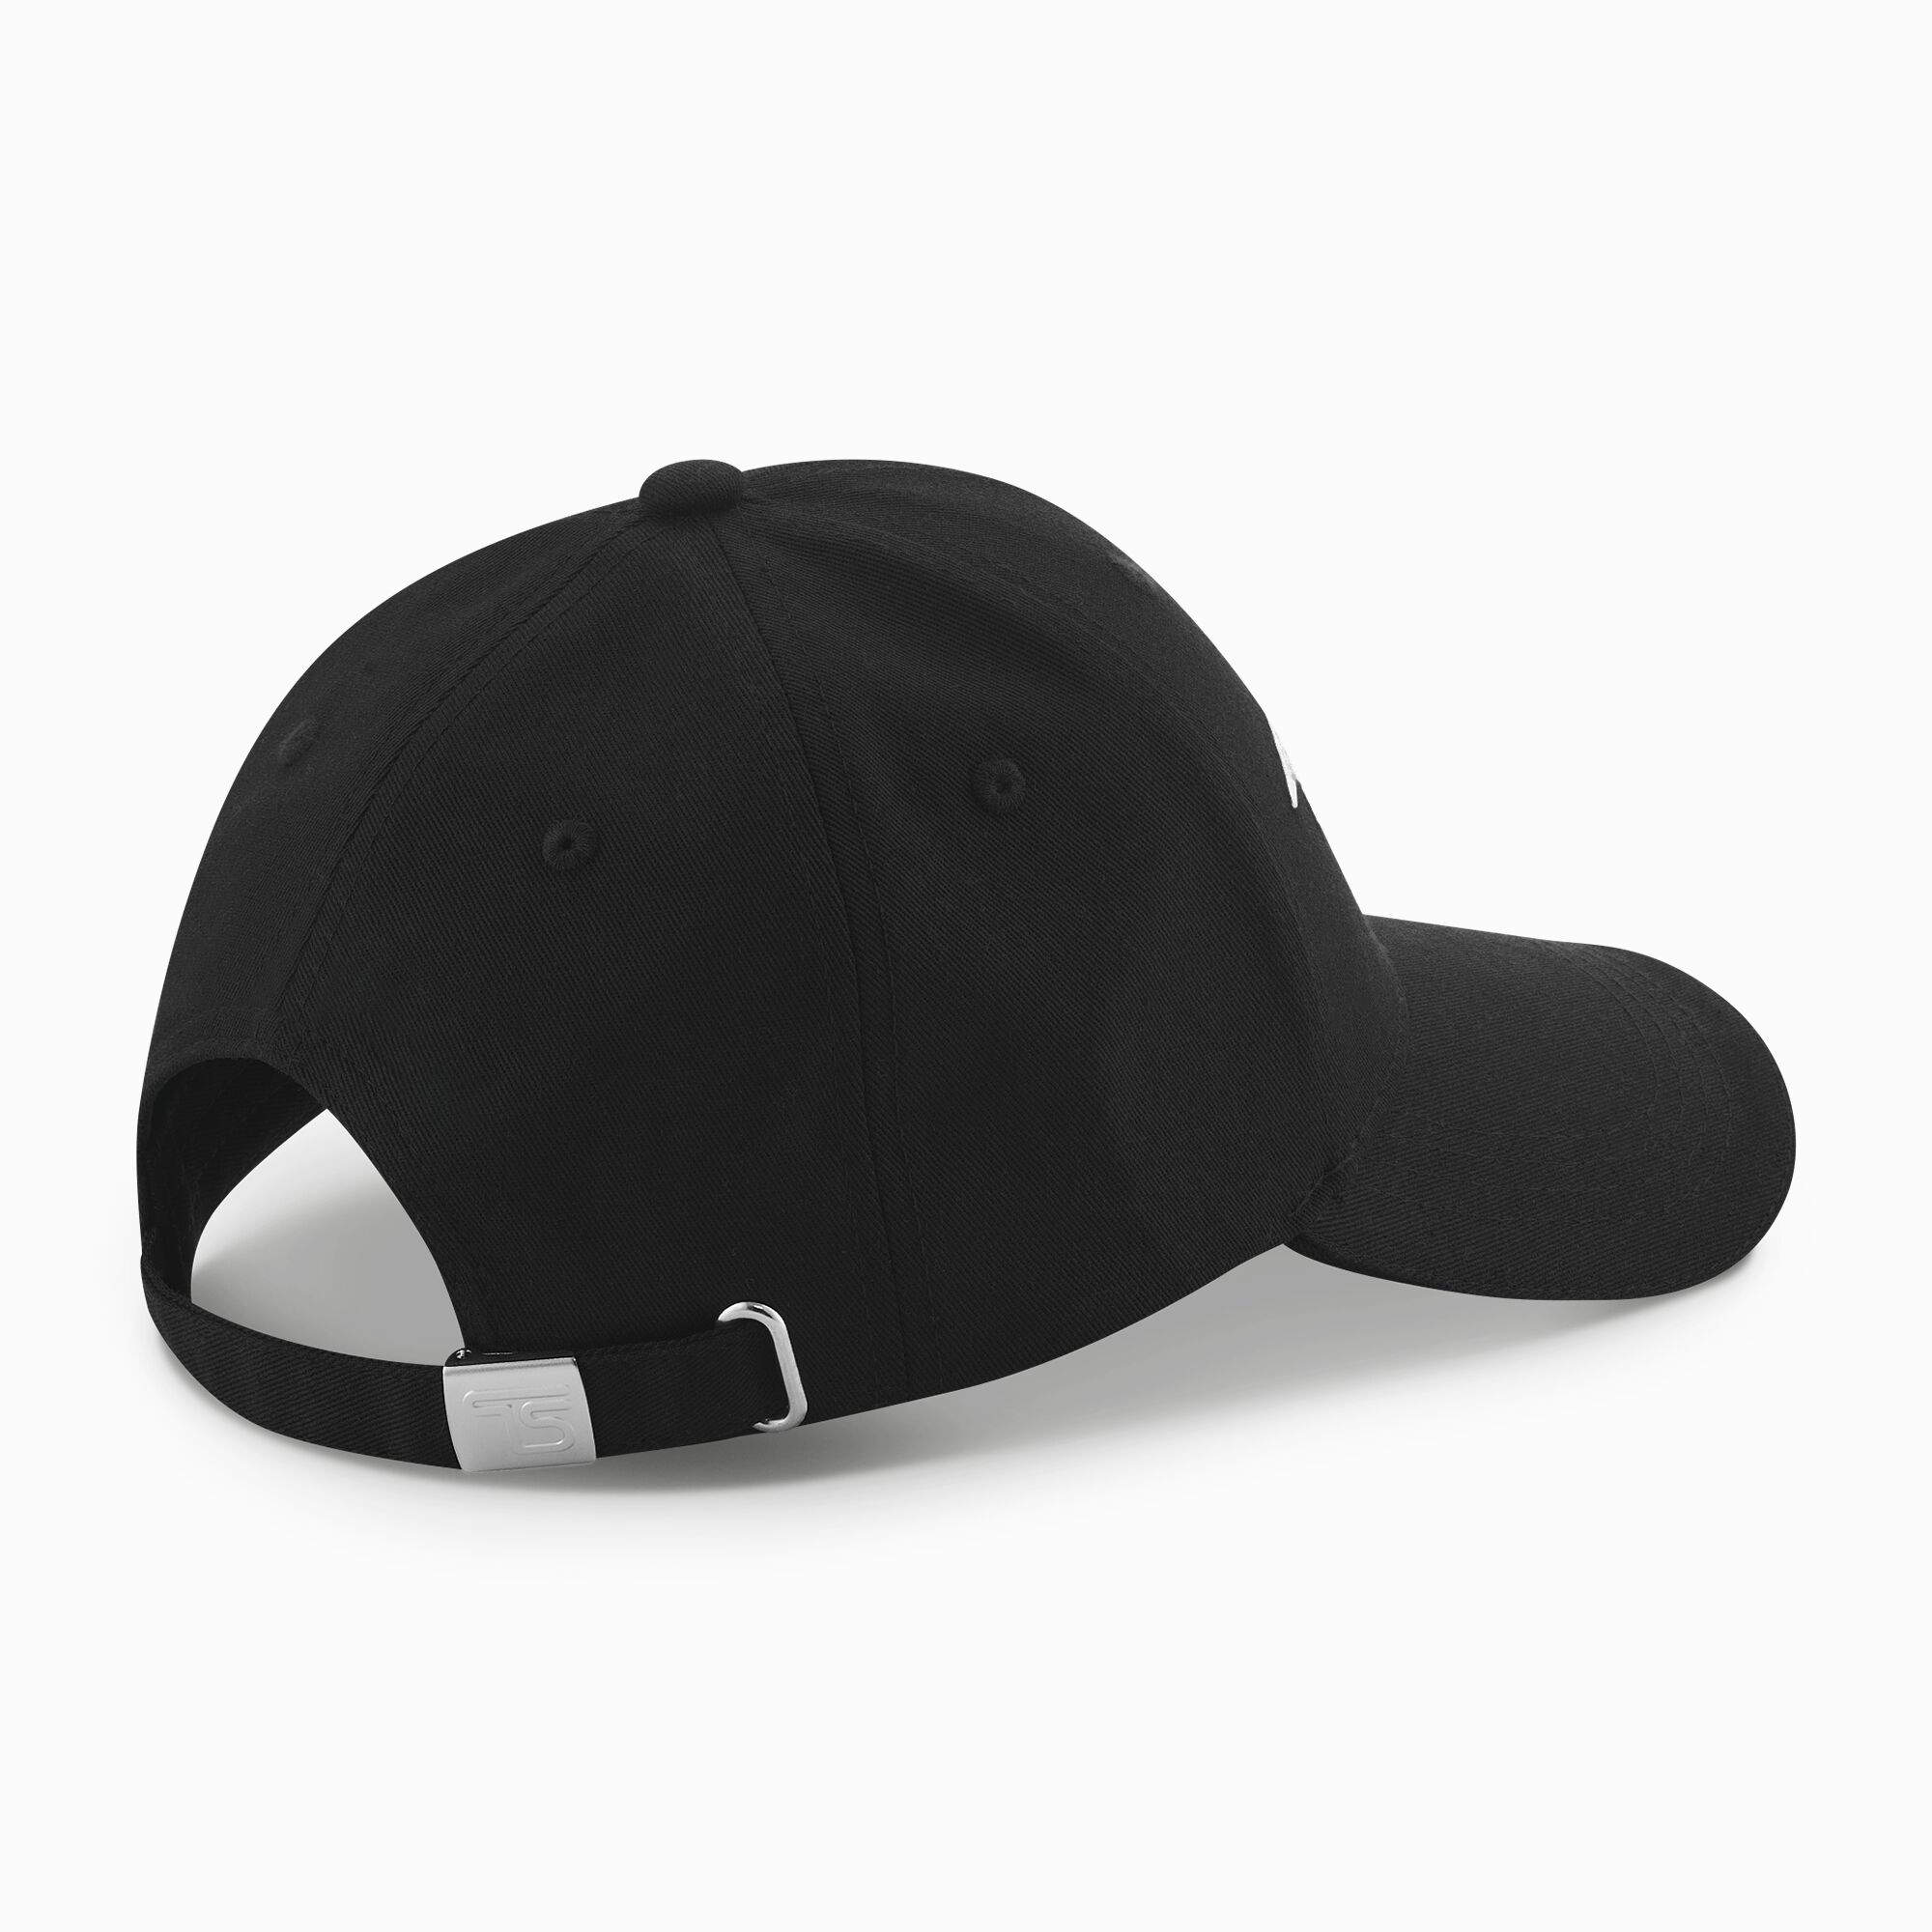 Thomas Sabo baseball cap black | SABO THOMAS 